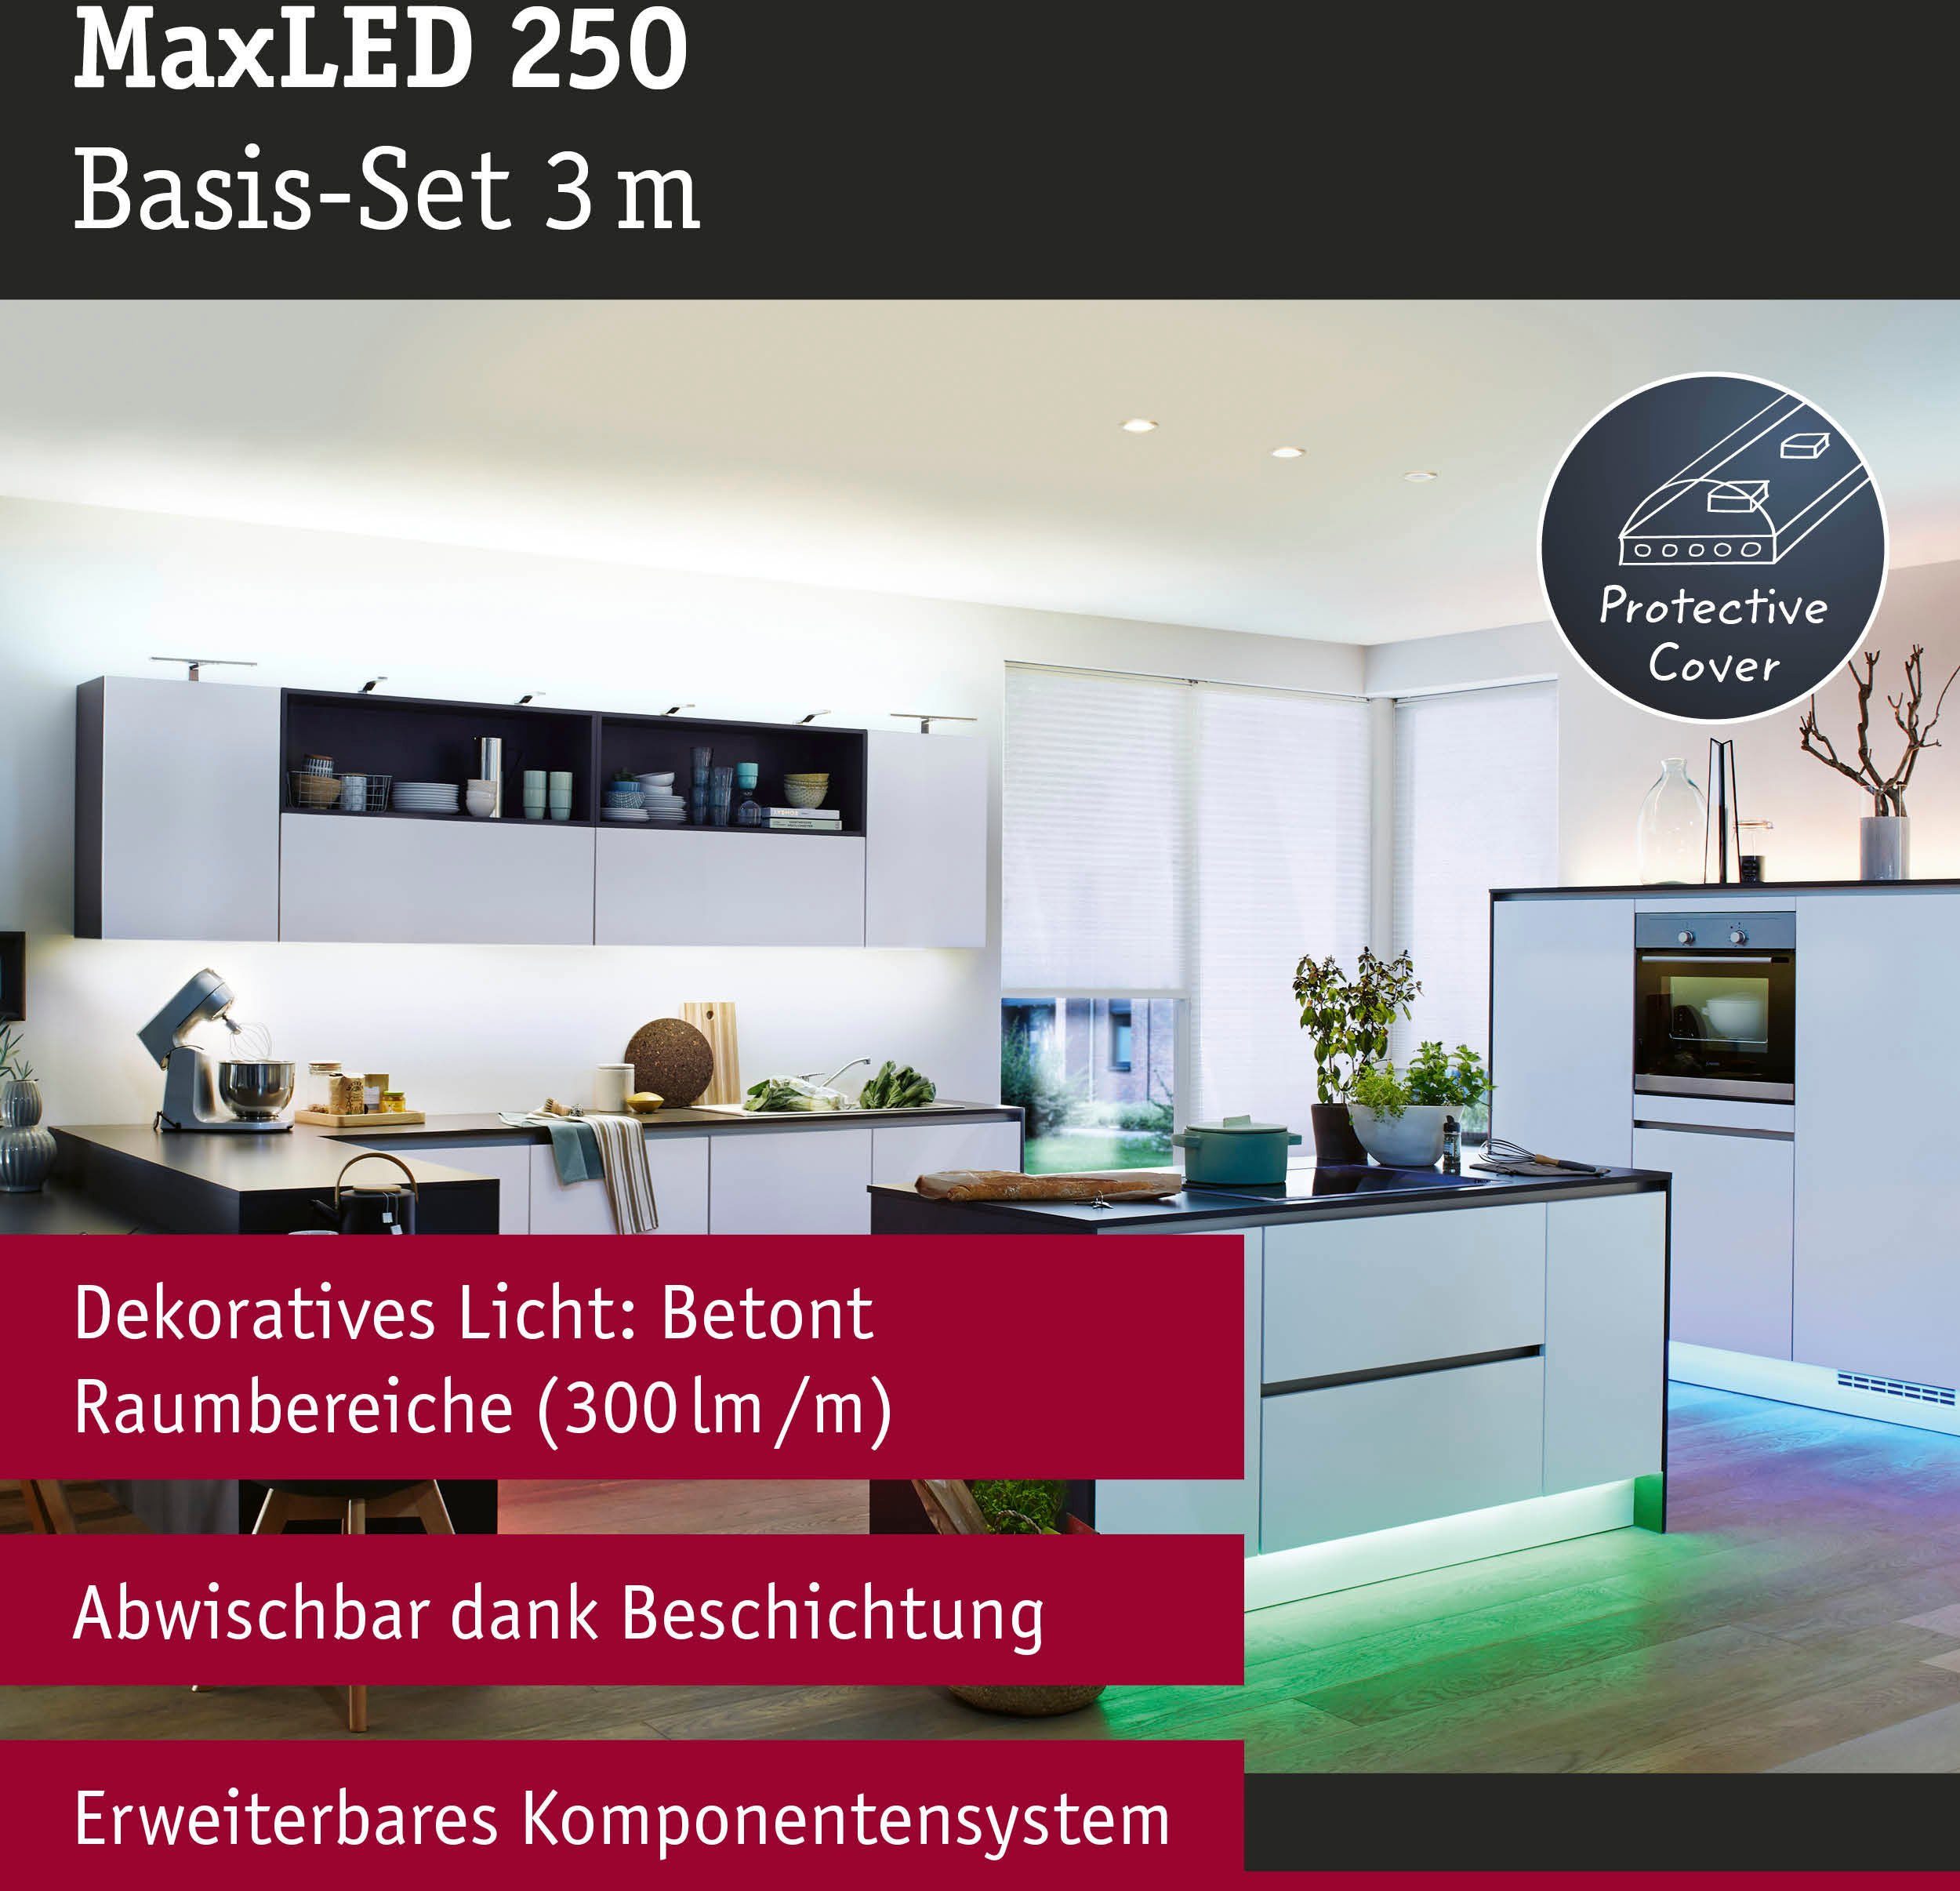 1-flammig, Basisset IP44 600lm, Home 3m, beschichtet 600 Zigbee RGBW, Paulmann MaxLED LED-Streifen 15W 250 Smart